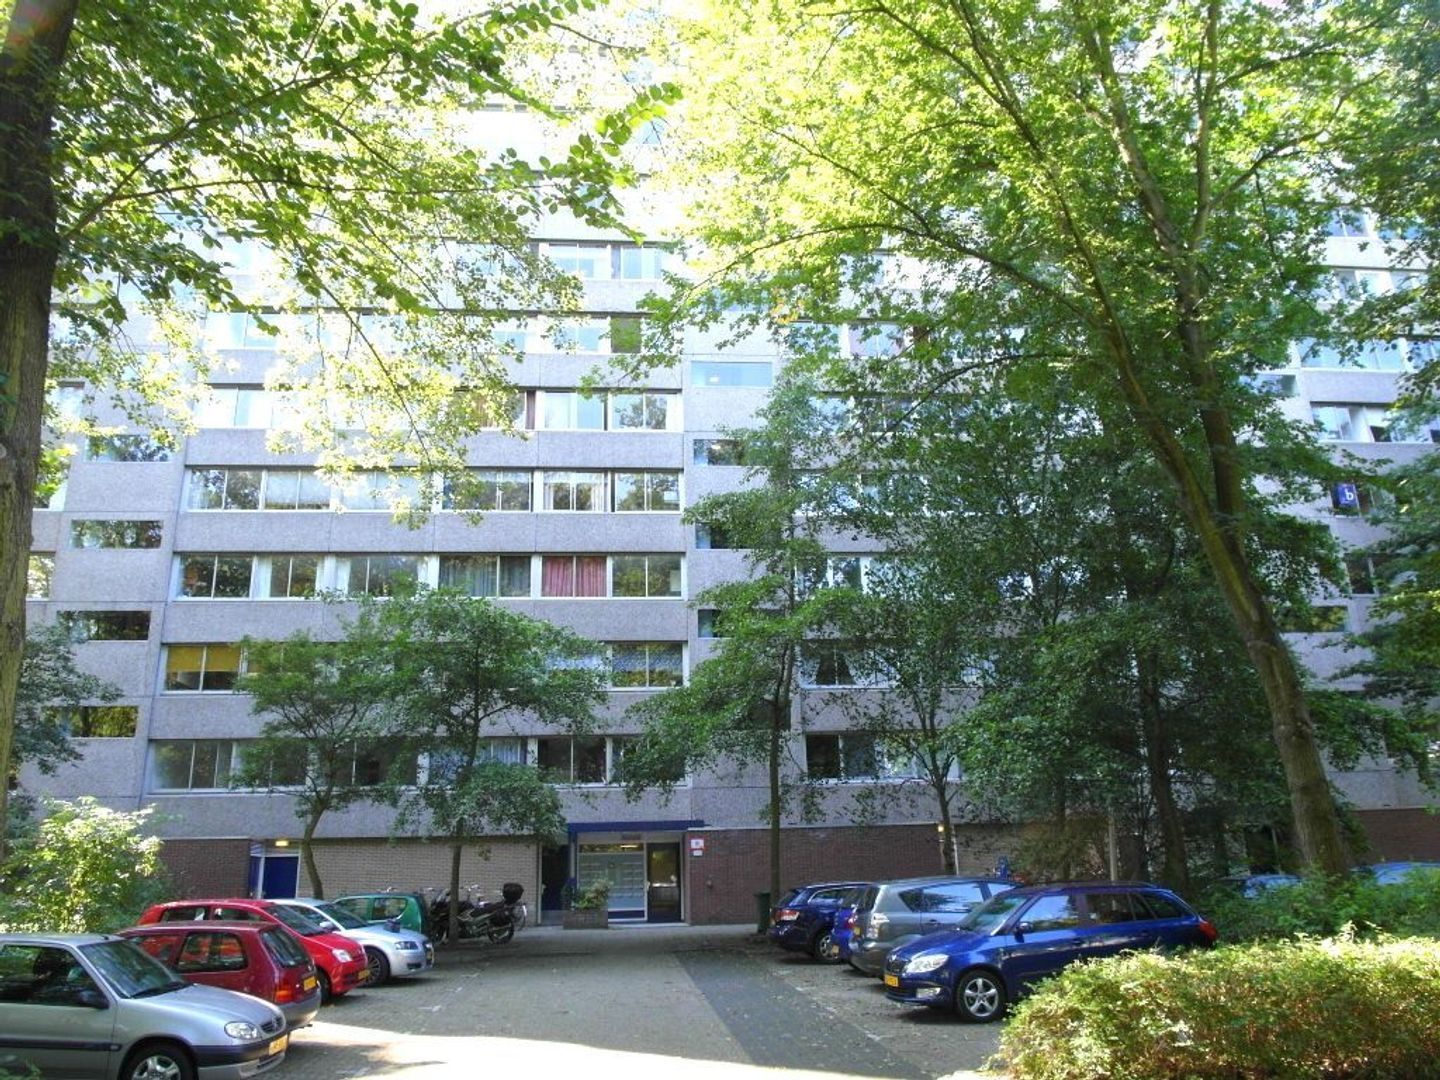 Appartement in Delft